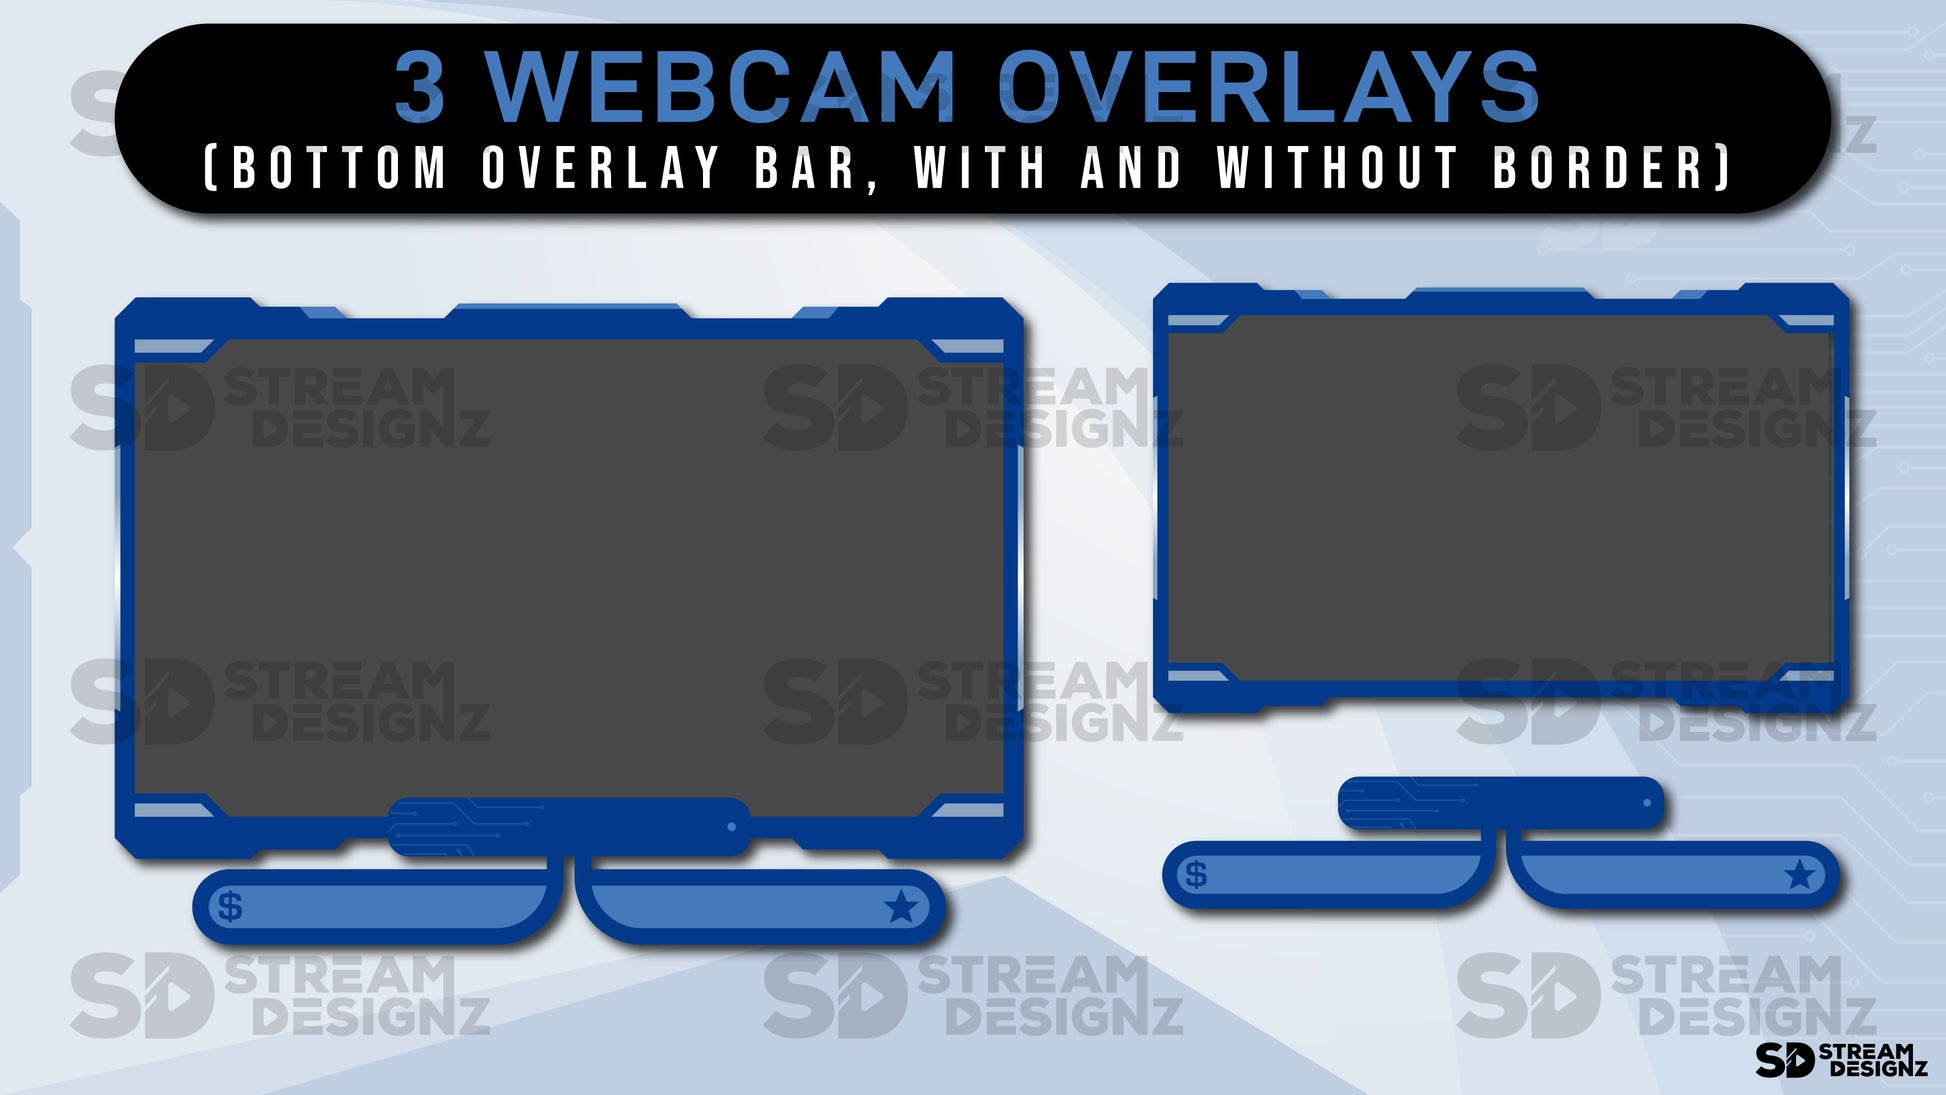 animated stream overlay package high tech 3 webcam overlays stream designz